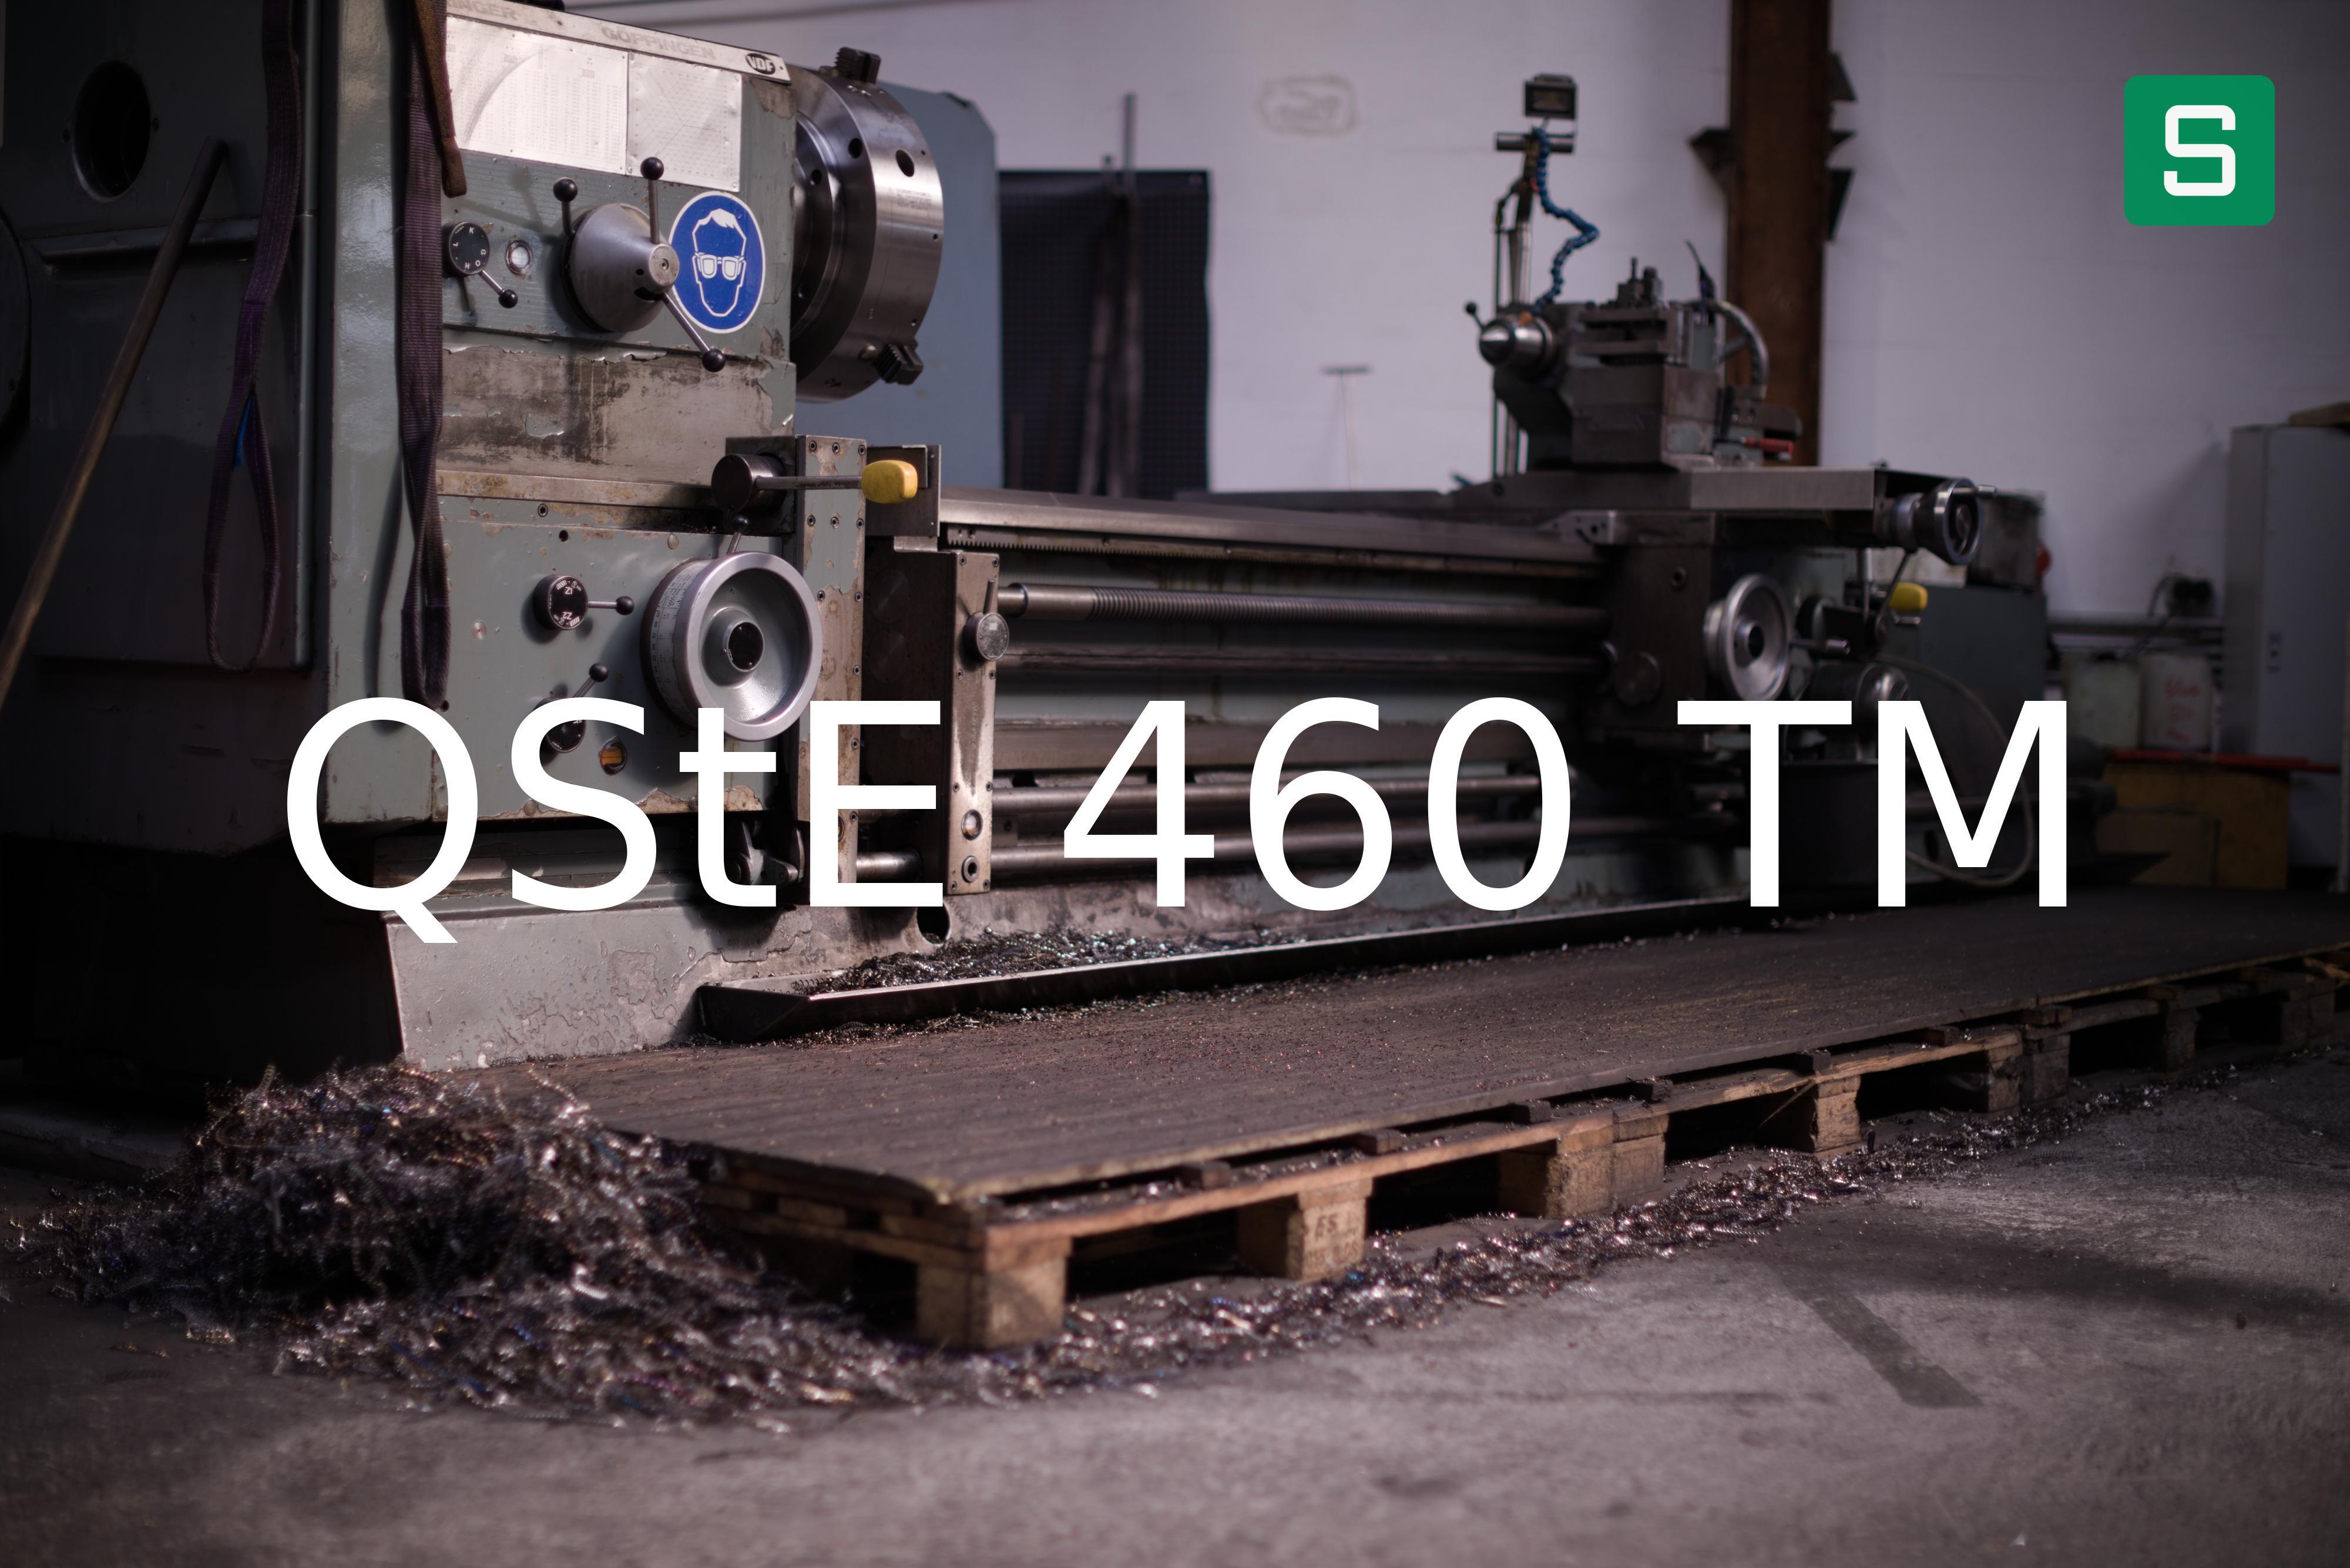 Steel Material: QStE 460 TM